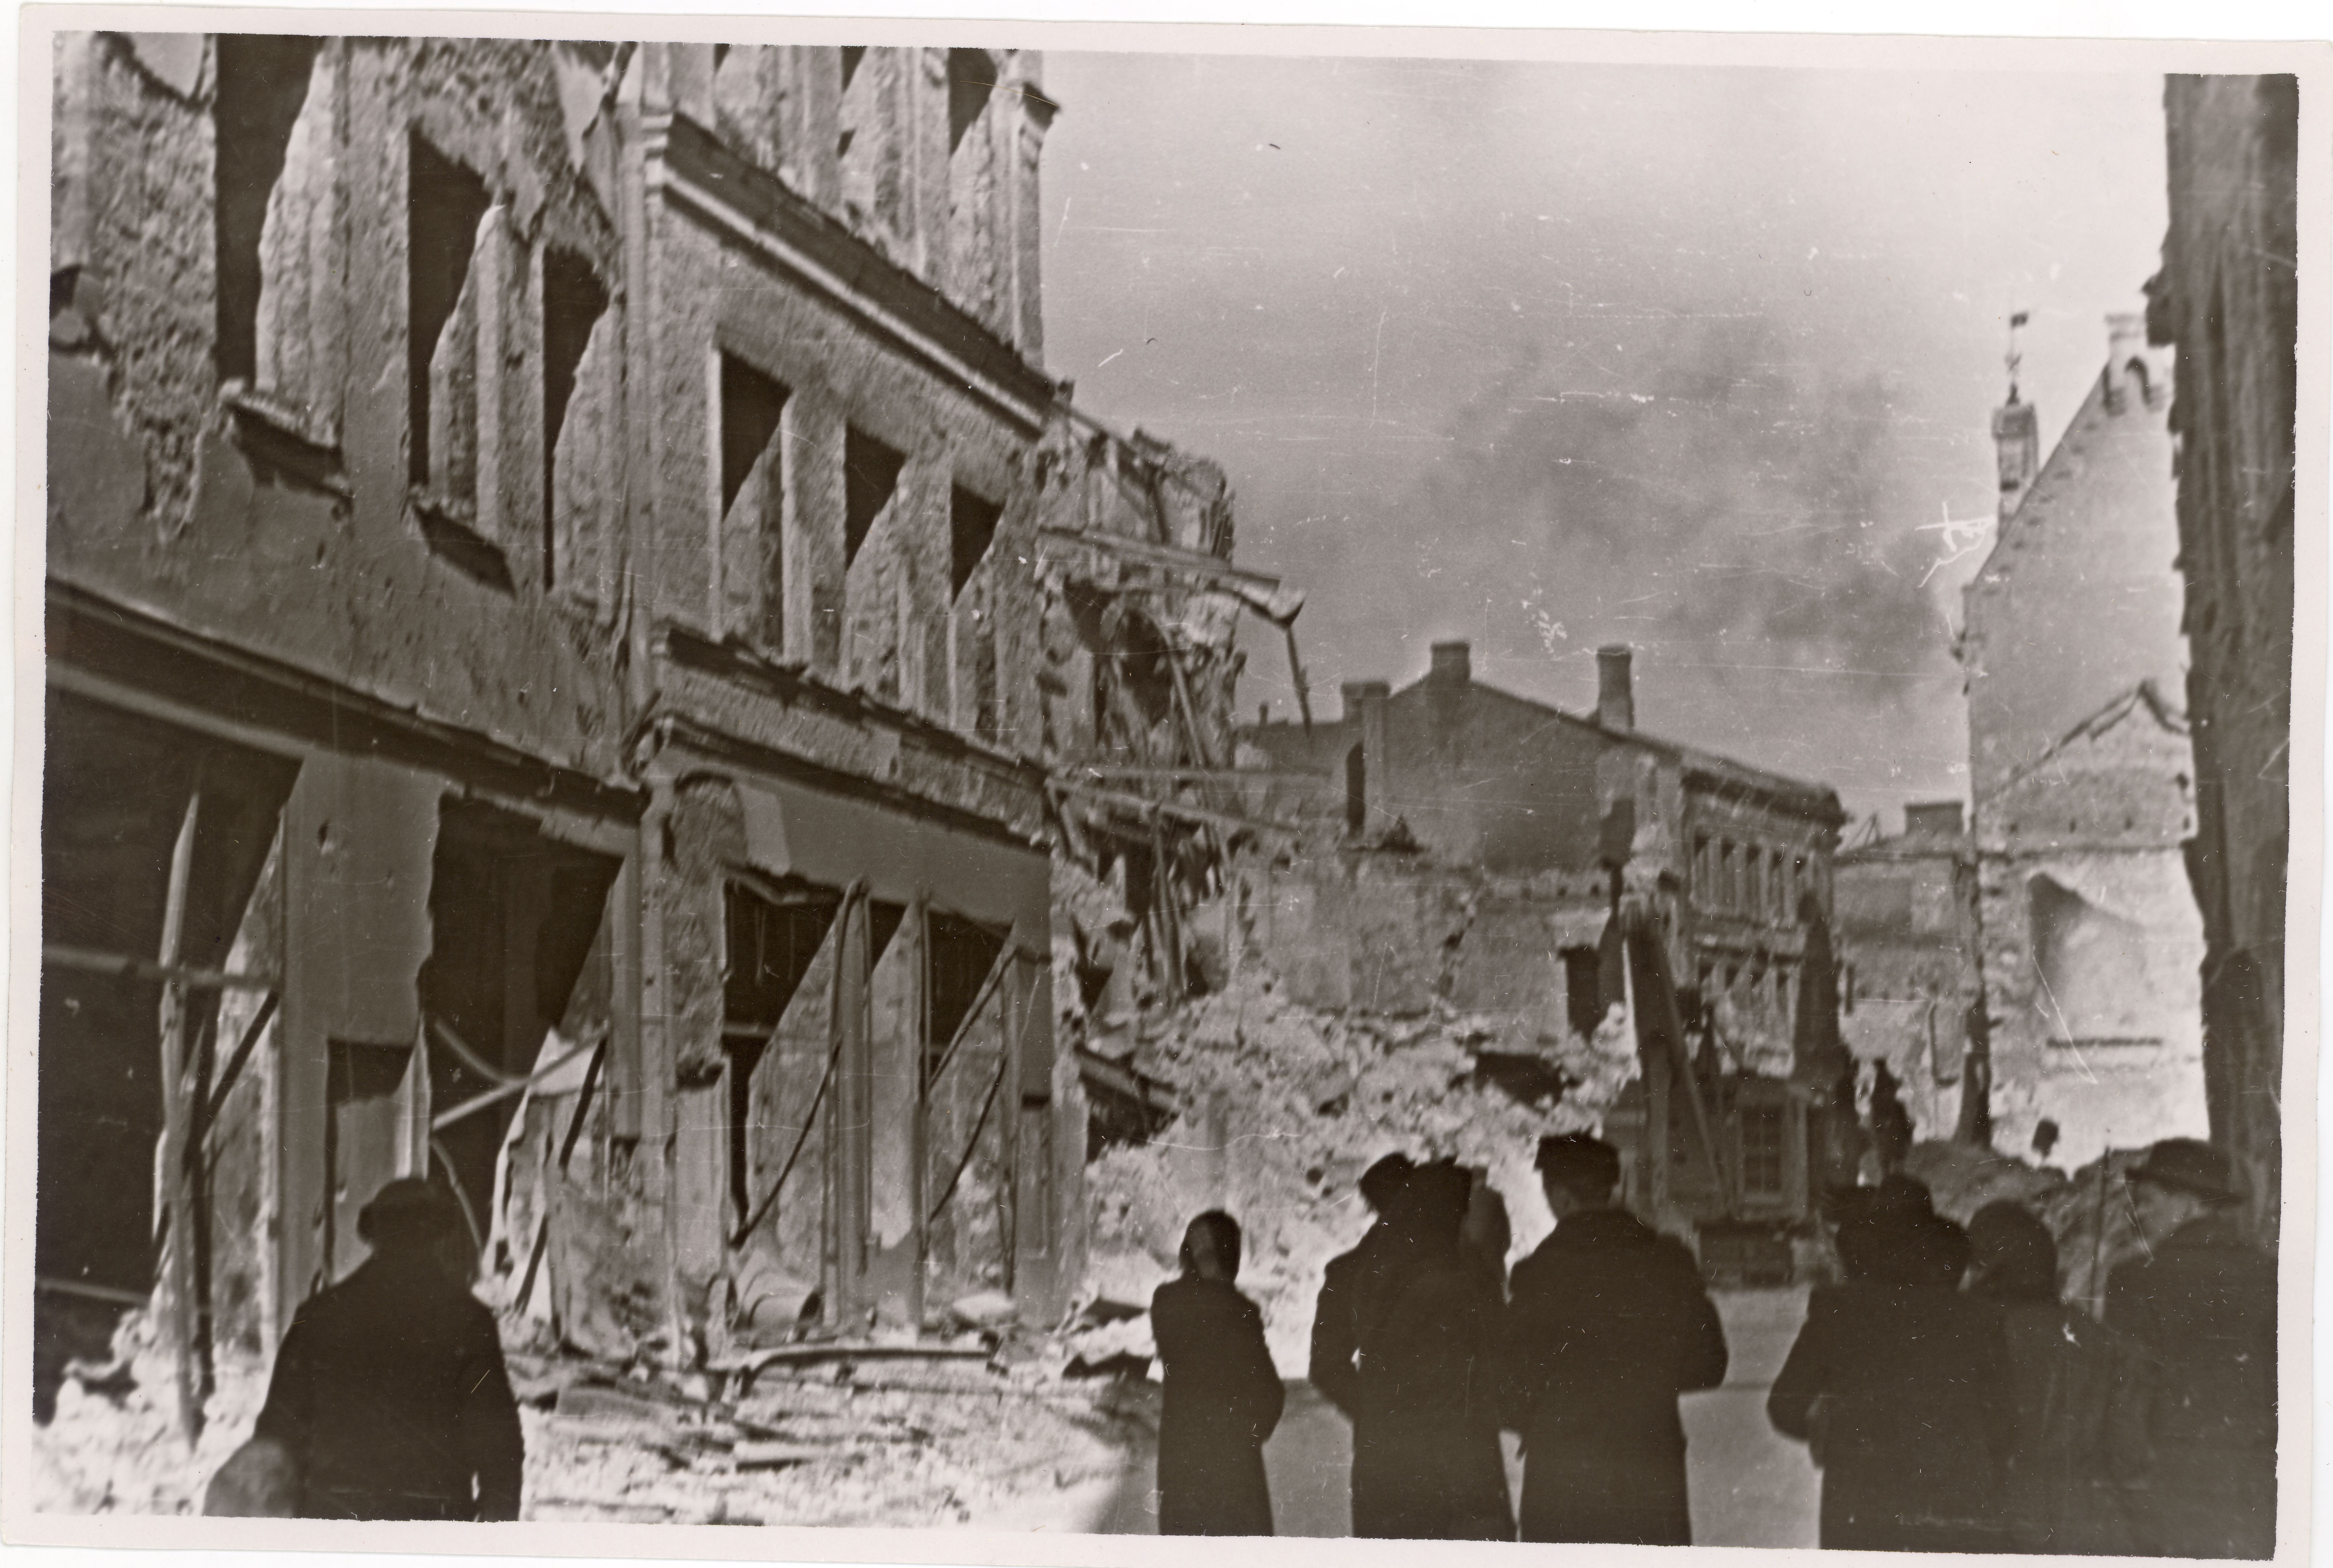 Bombing of Tallinn in World War II - Wikipedia